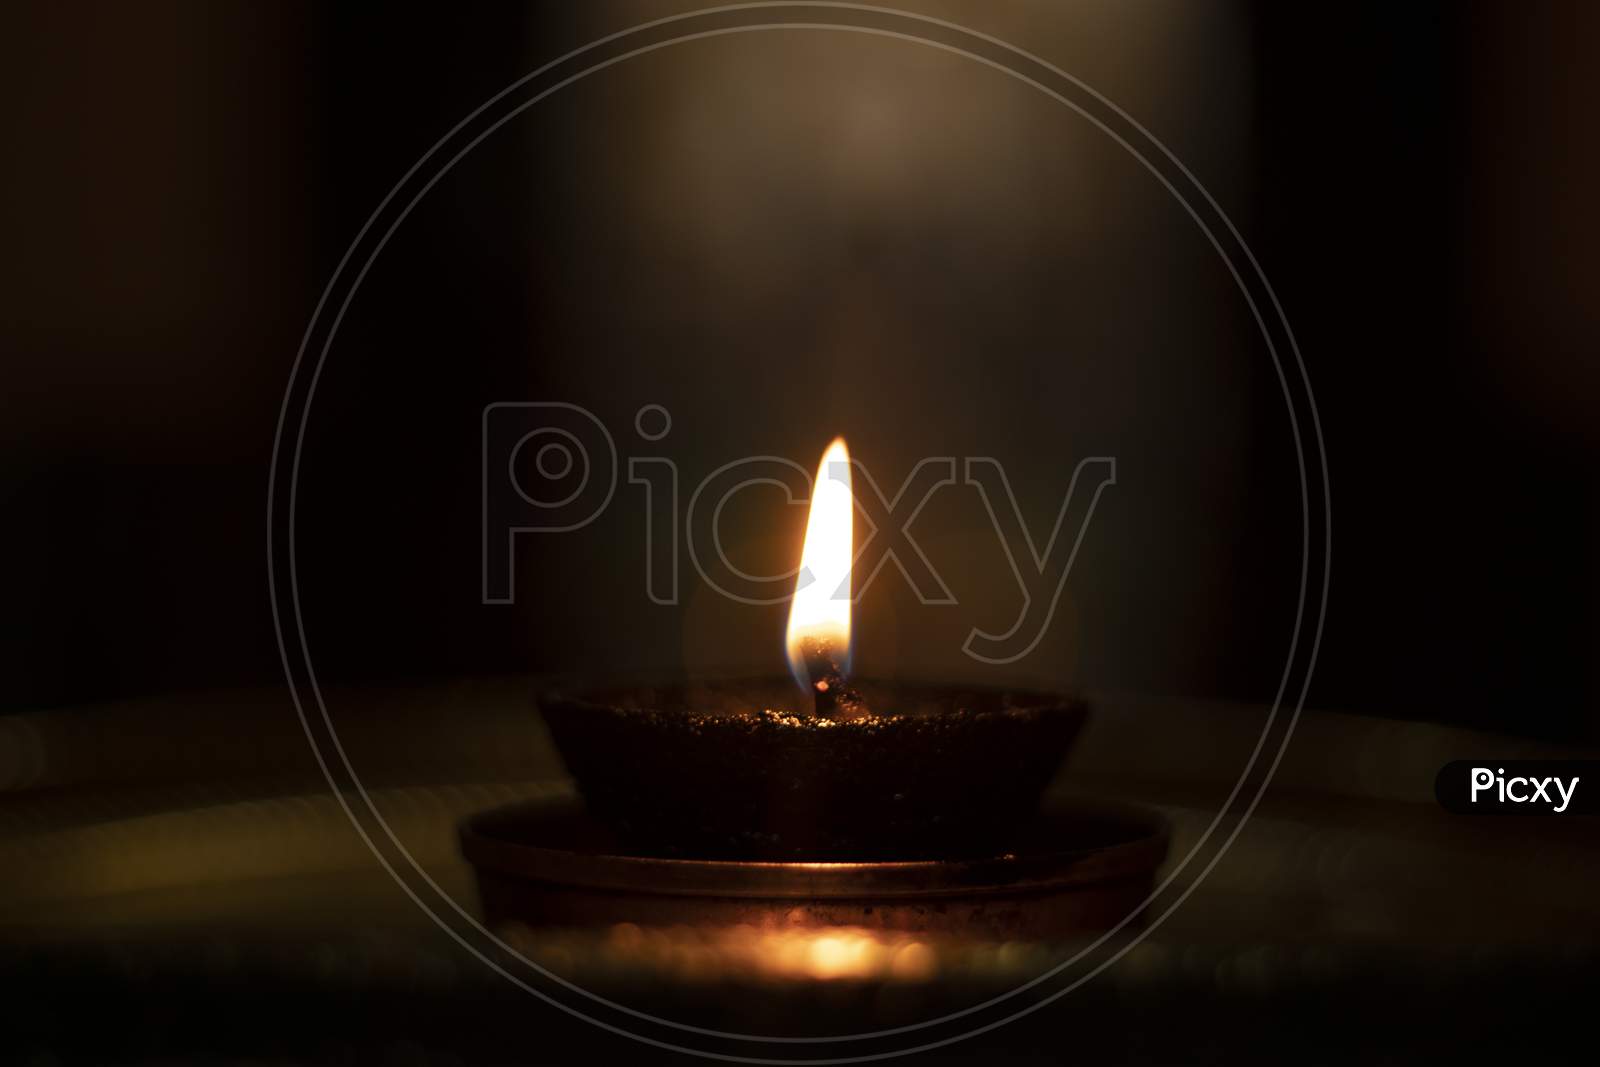 Concept Of Light In Darkness Showing With Diwali Terracotta Diya Ot Light Lamp In Dark.